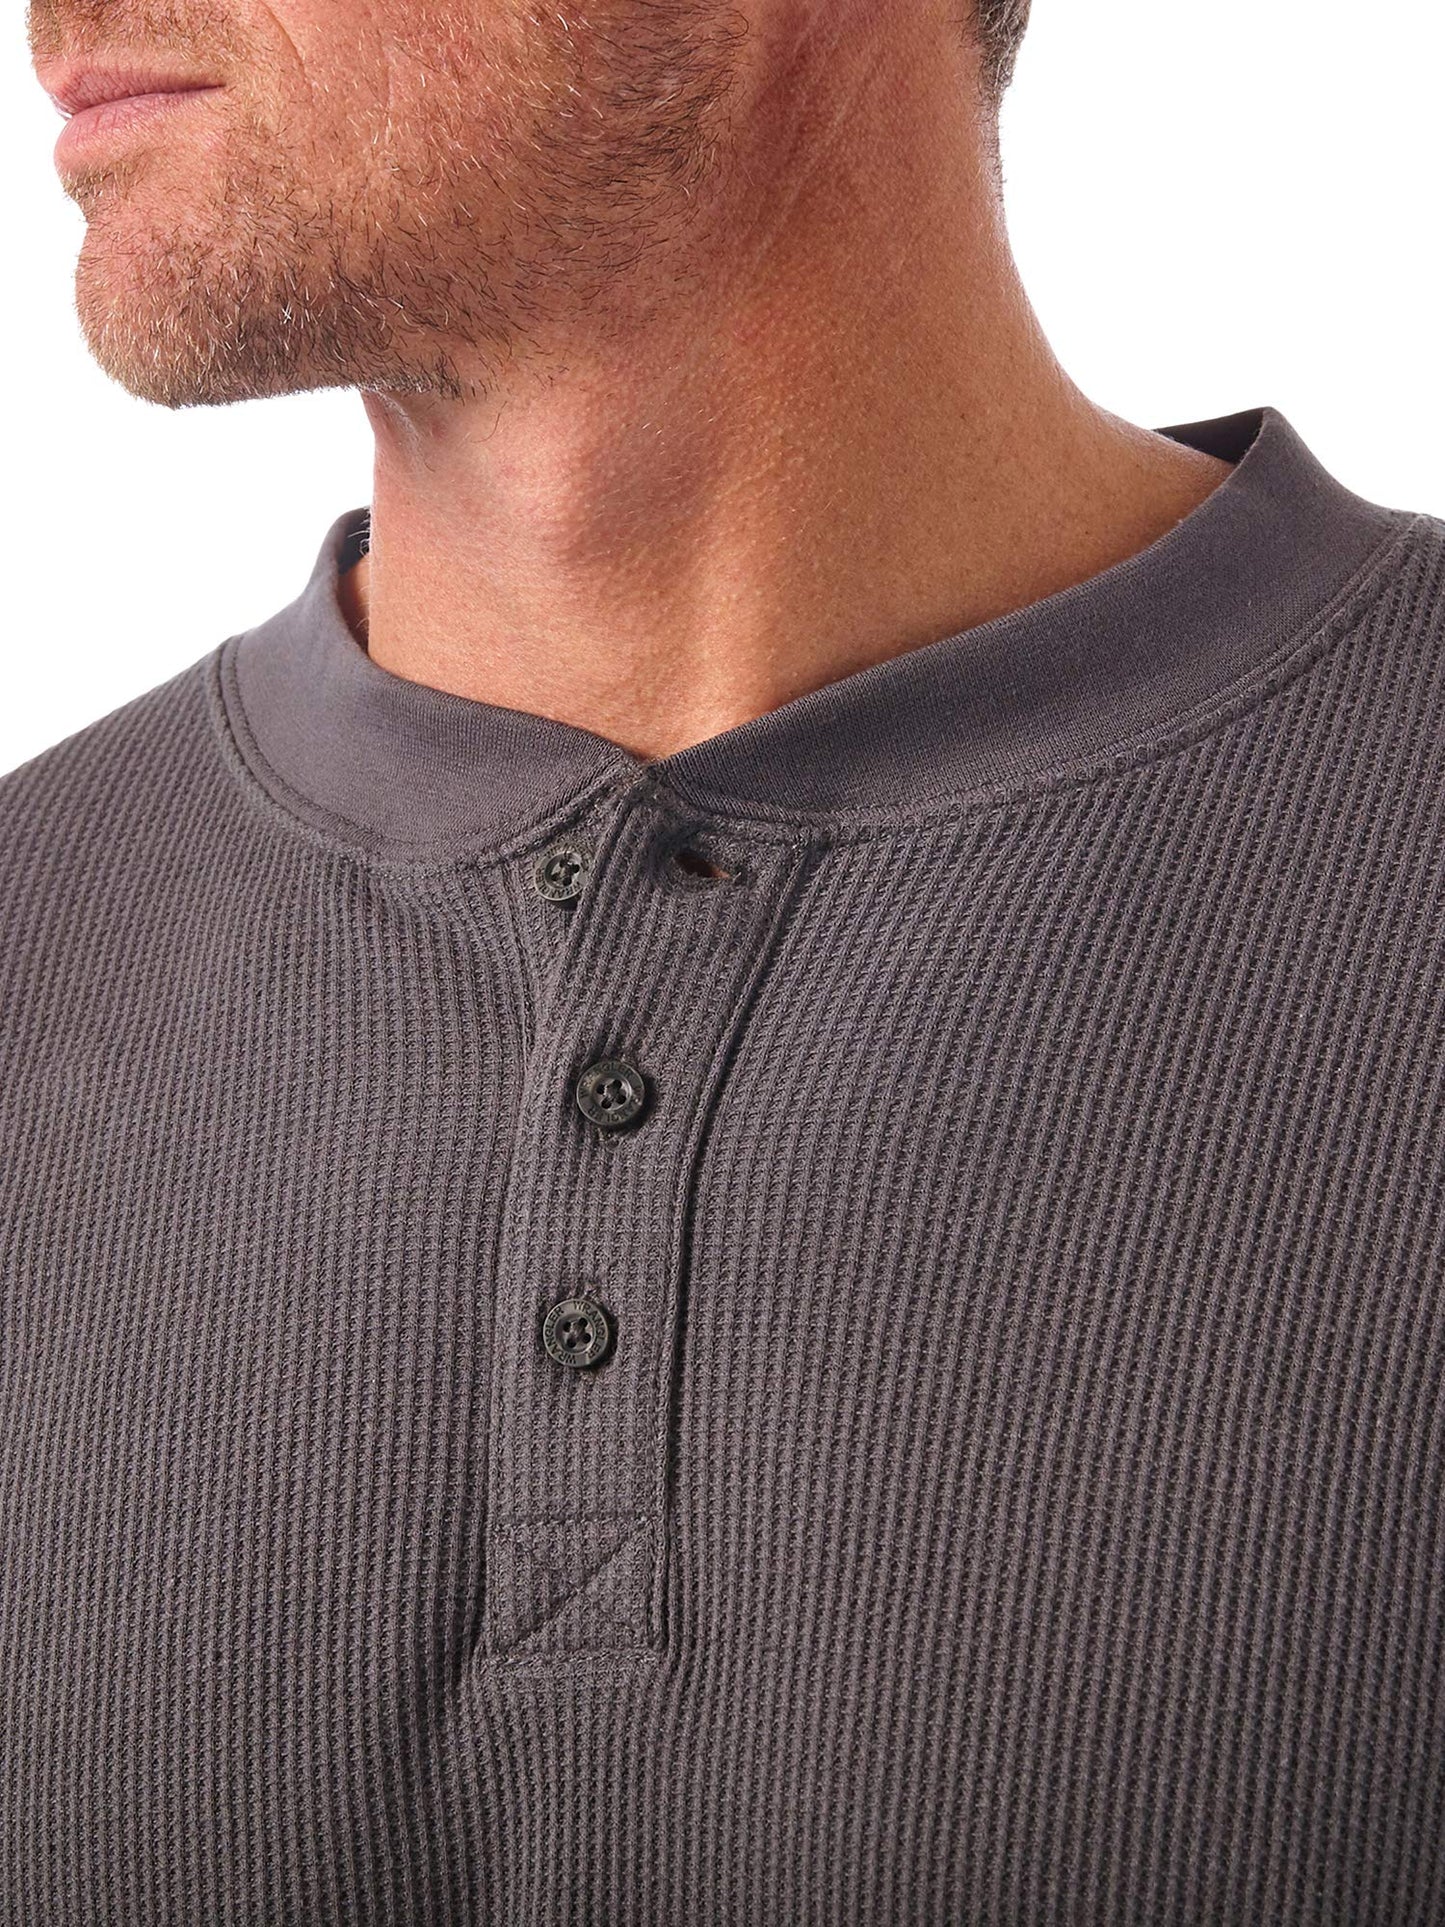 Wrangler Authentics Men's Long Sleeve Waffle Henley, Dark Charcoal, 3X-Large